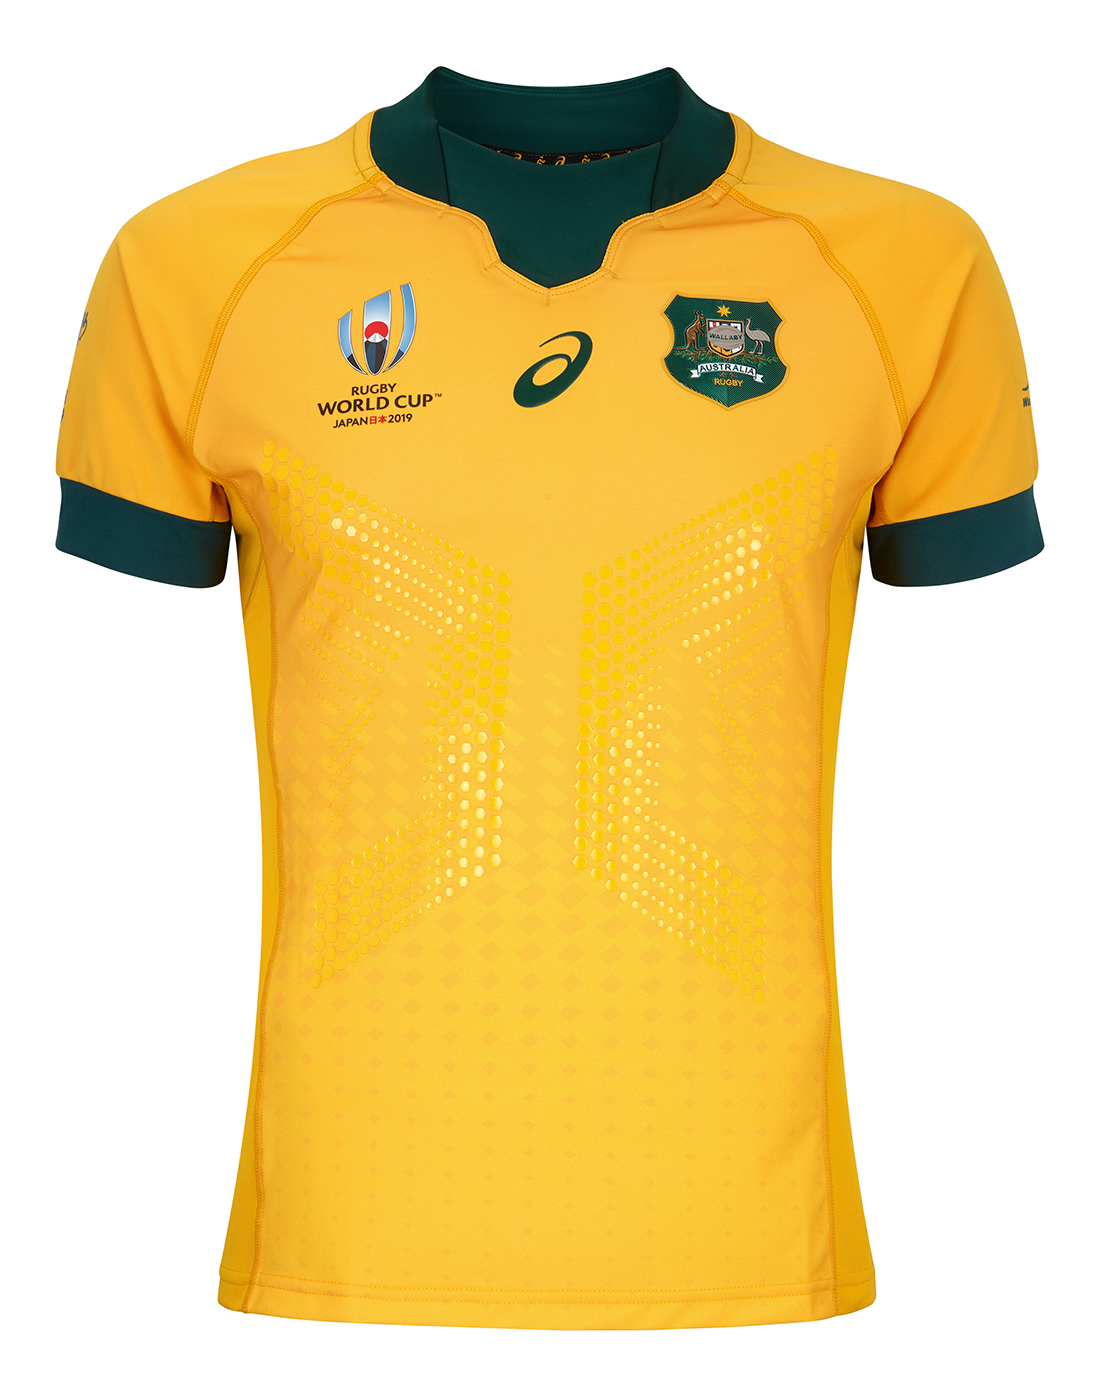 australia rugby kit